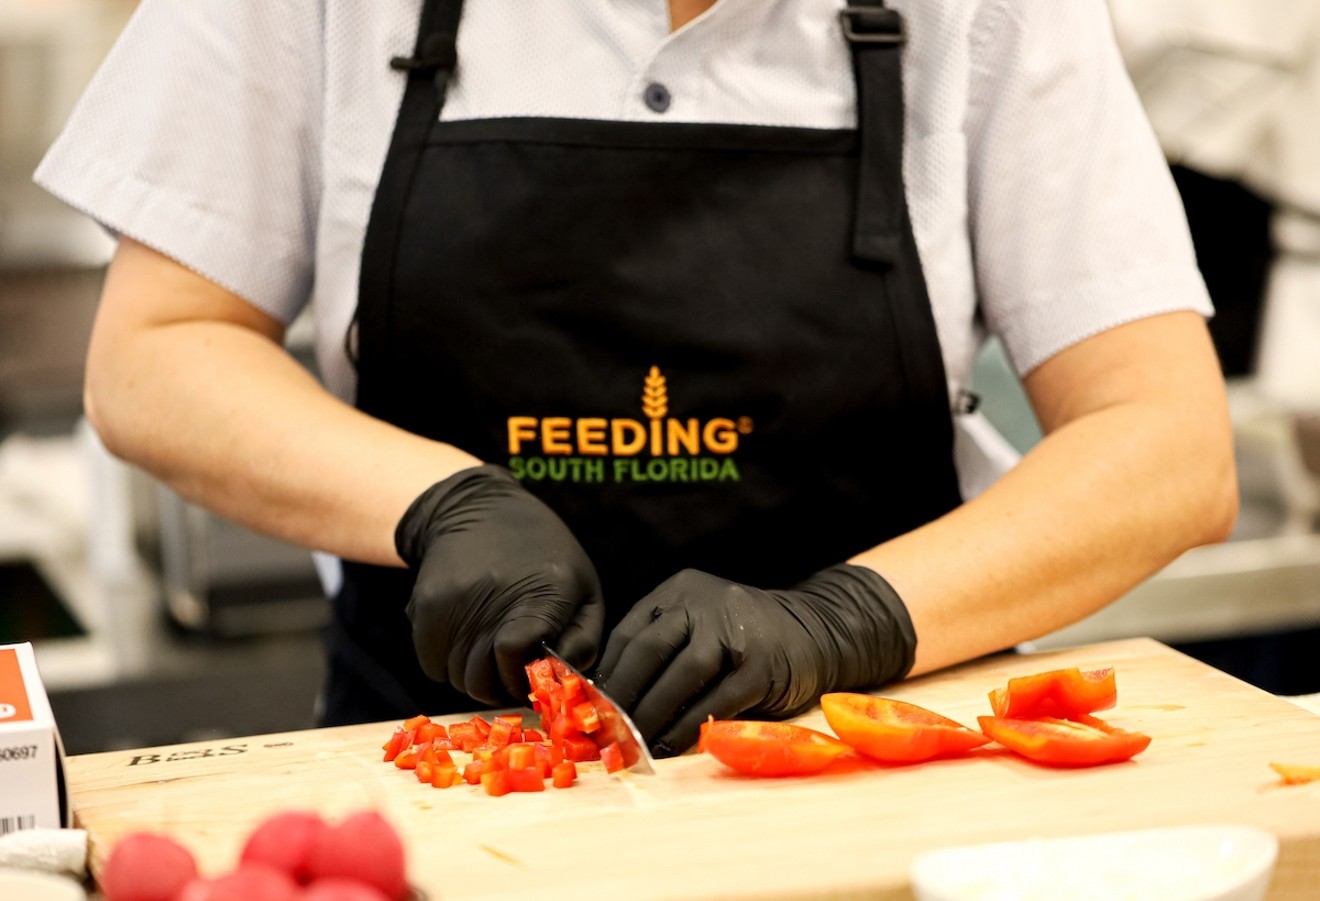 Learn culinary skills at Feeding South Florida's training programs.